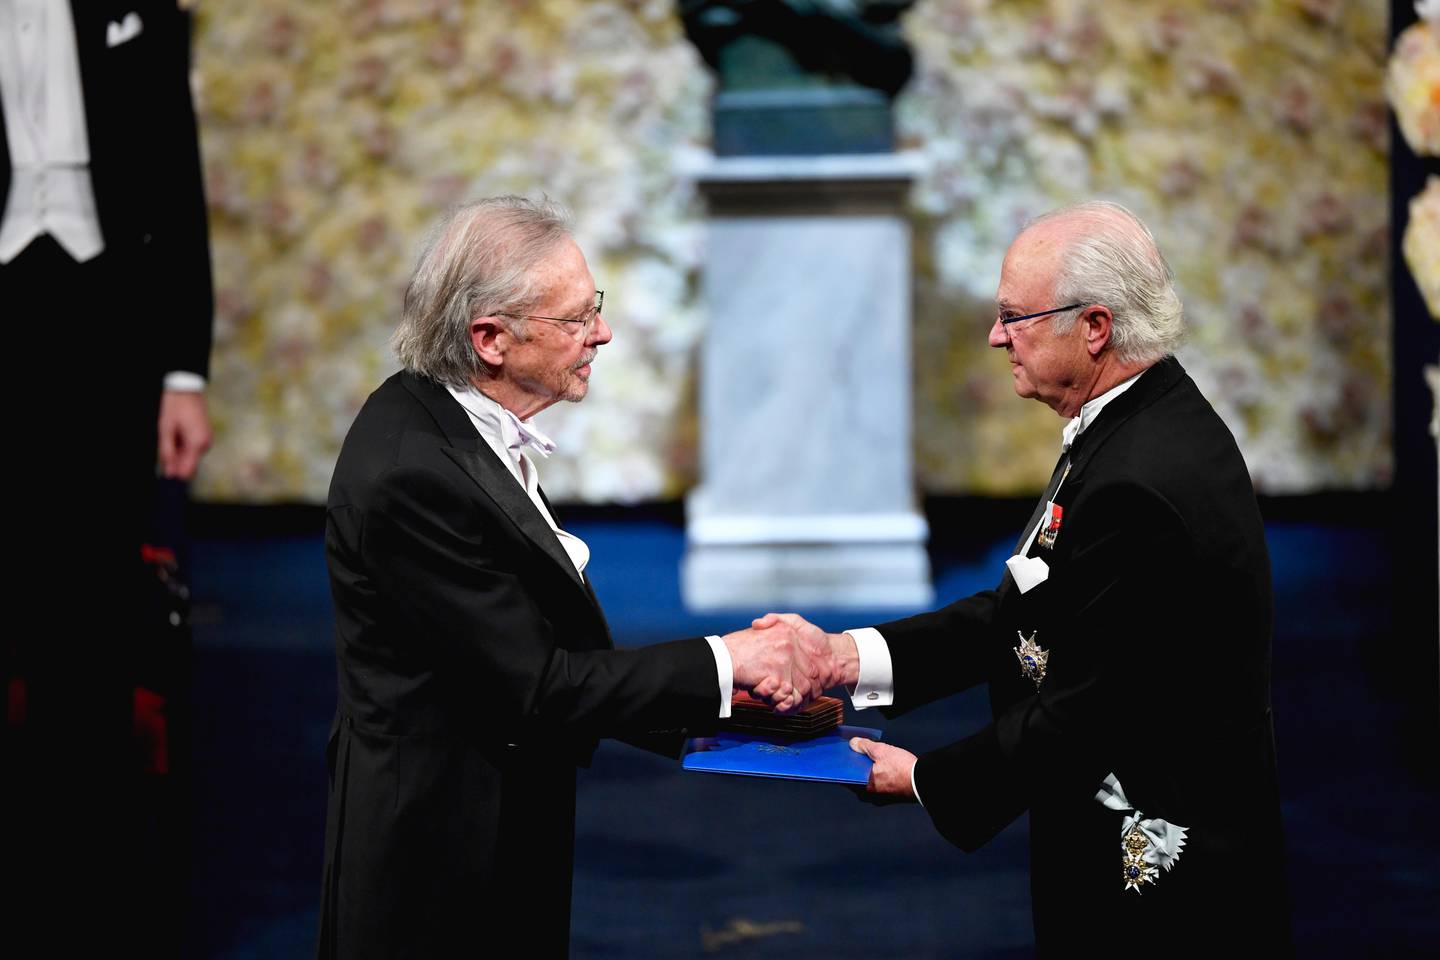 Austrian author Peter Handke, left, receives the 2019 Nobel Prize from King Carl Gustaf of Sweden, during the Nobel Prize award ceremony at the Stockholm Concert Hall, in Stockholm, Tuesday, Dec. 10, 2019. (Henrik Montgomery/TT News Agency via AP)